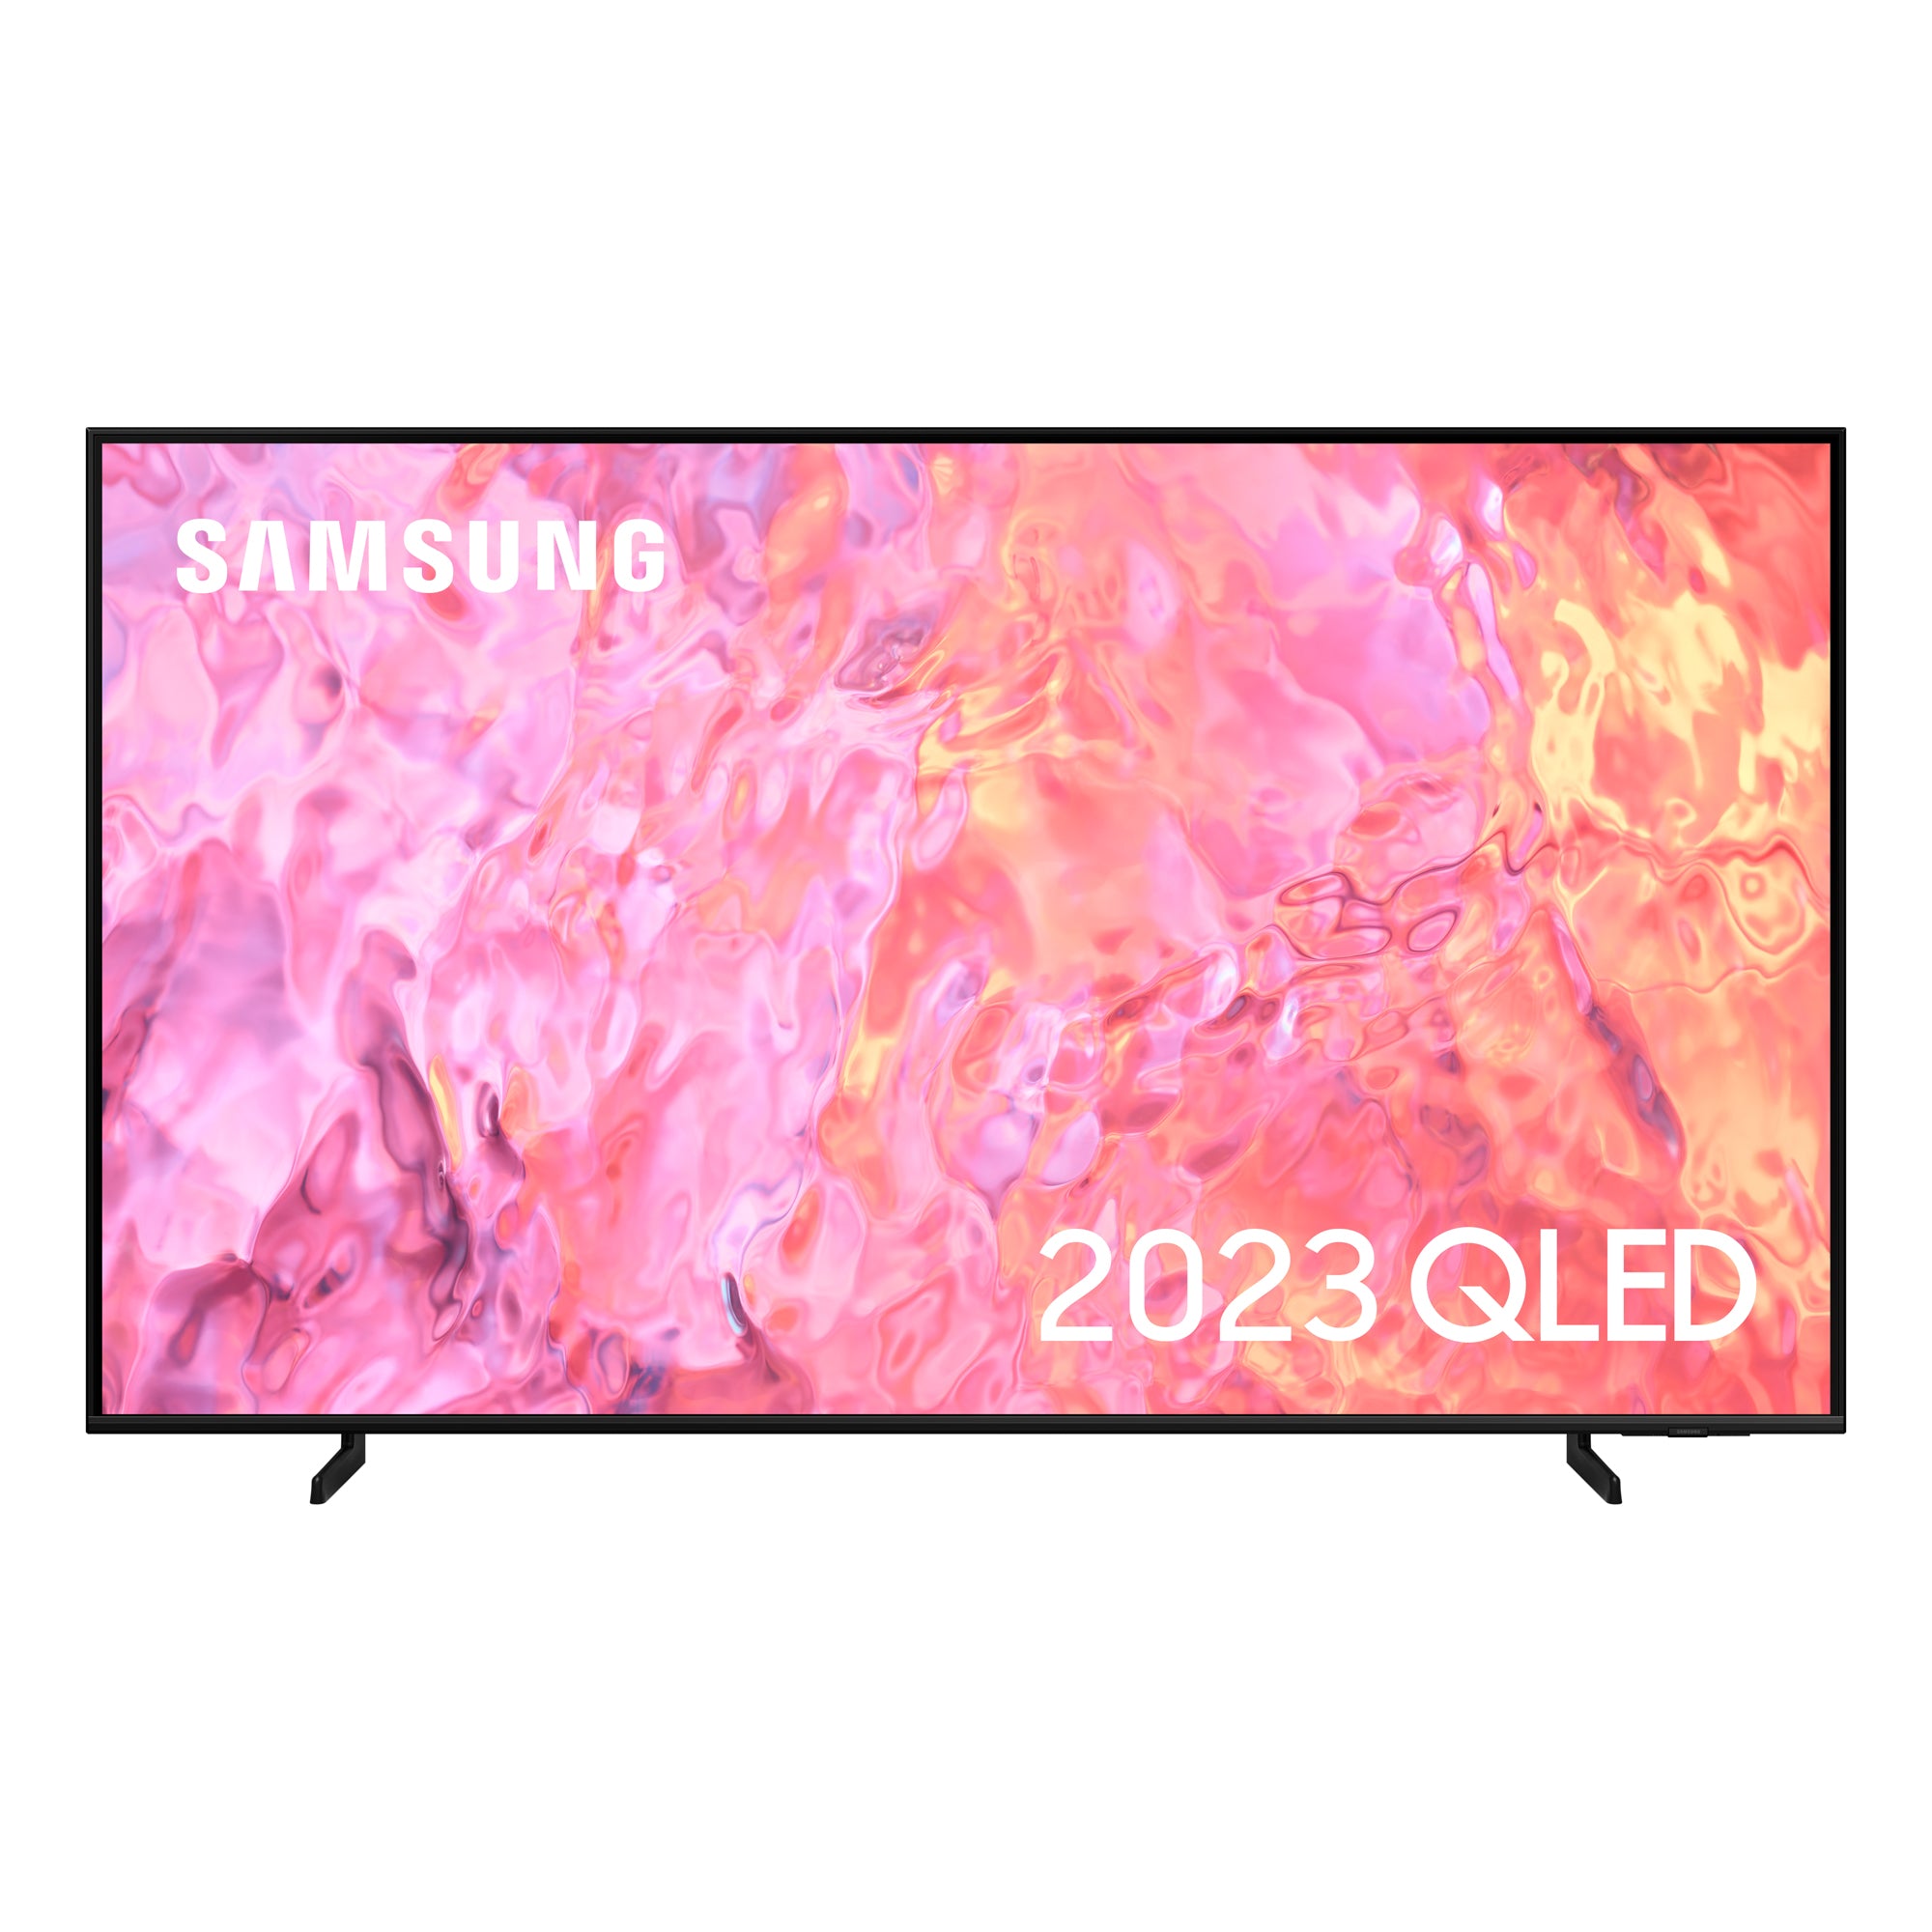 Samsung Q60C 65" 4K HDR QLED Smart TV - Black | QE65Q60CAUXXU from Samsung - DID Electrical